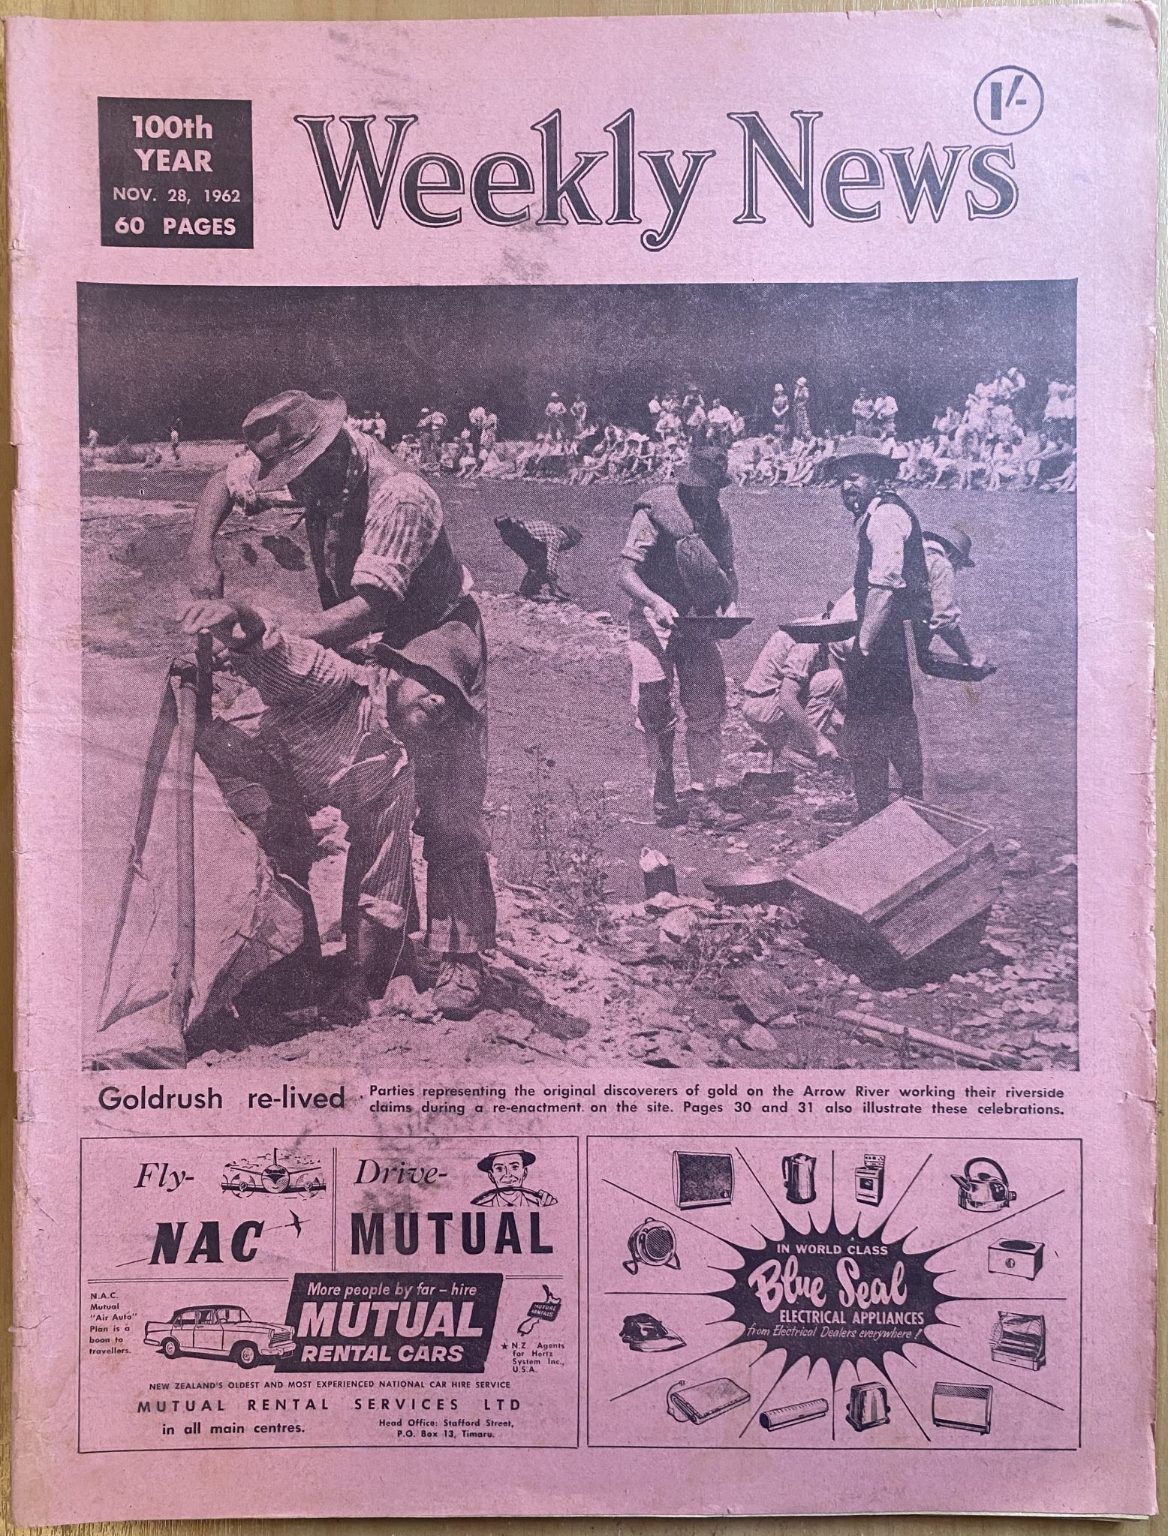 OLD NEWSPAPER: The Weekly News, No. 5166, 28 November 1962